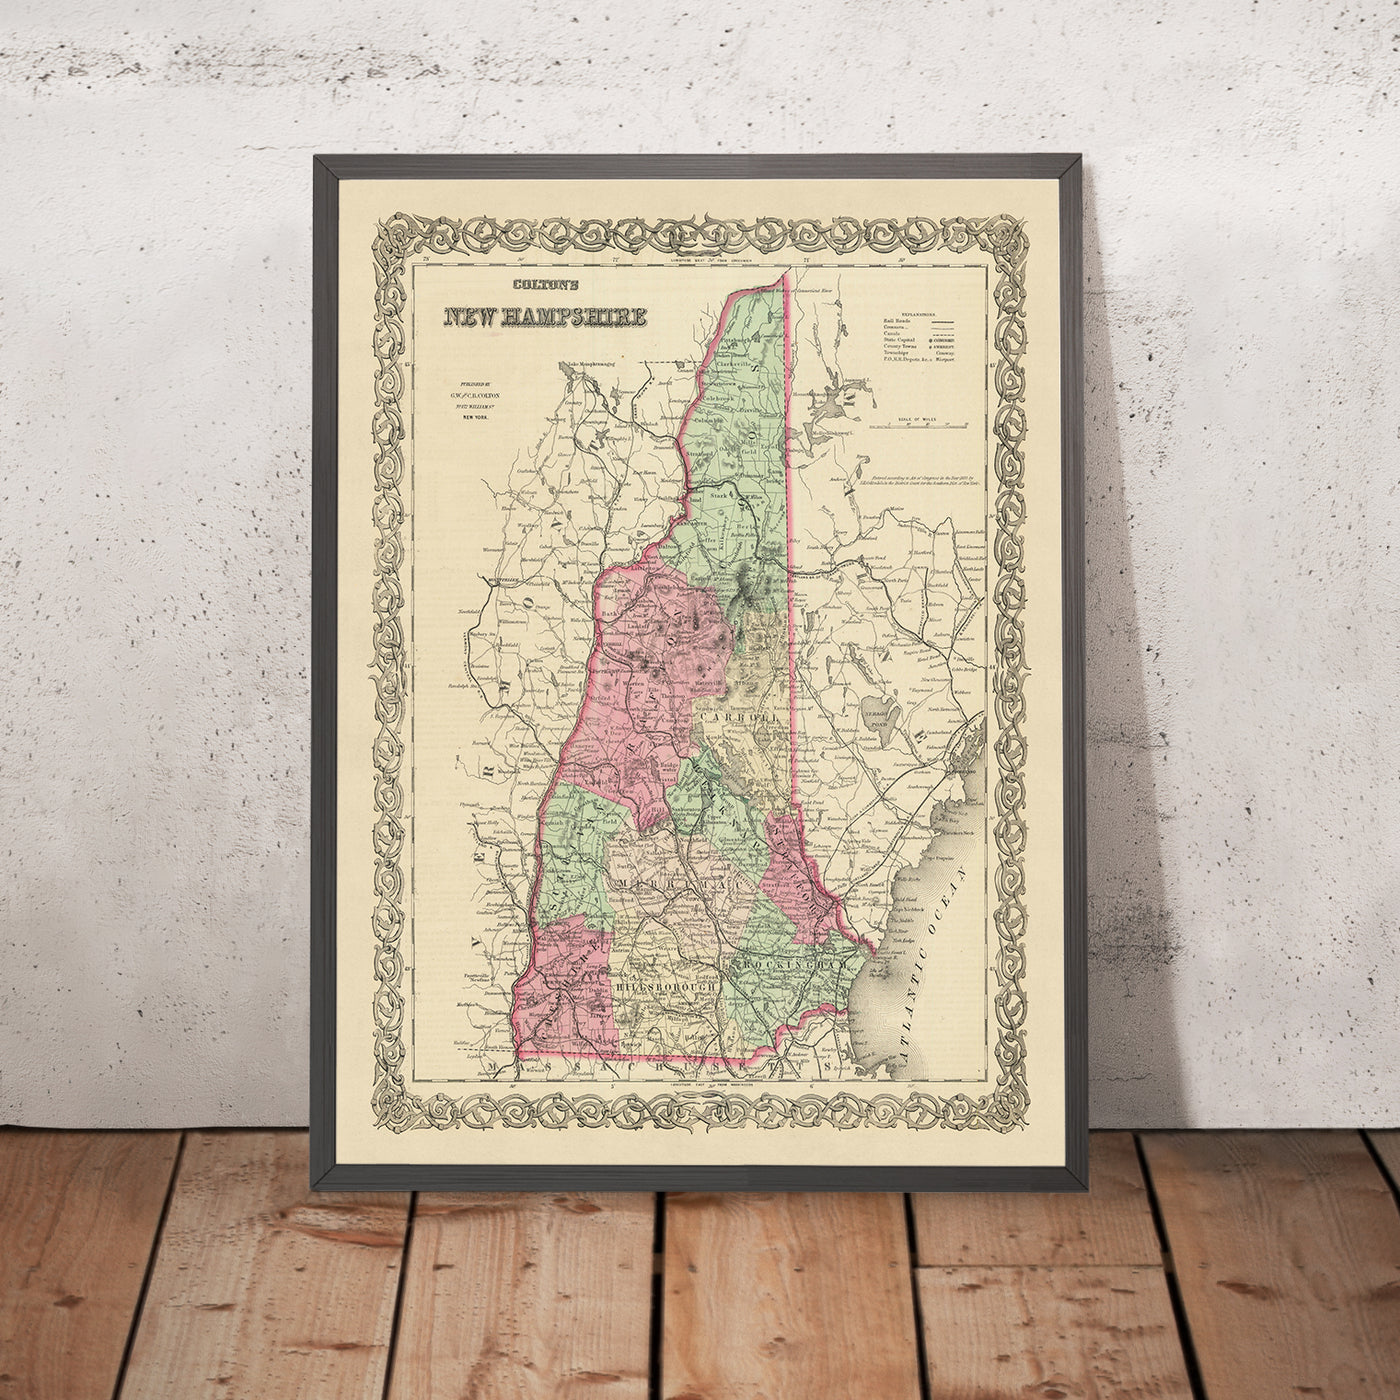 Mapa antiguo de New Hampshire por JH Colton, 1855: Concord, Portsmouth, Dover, Nashua y Manchester